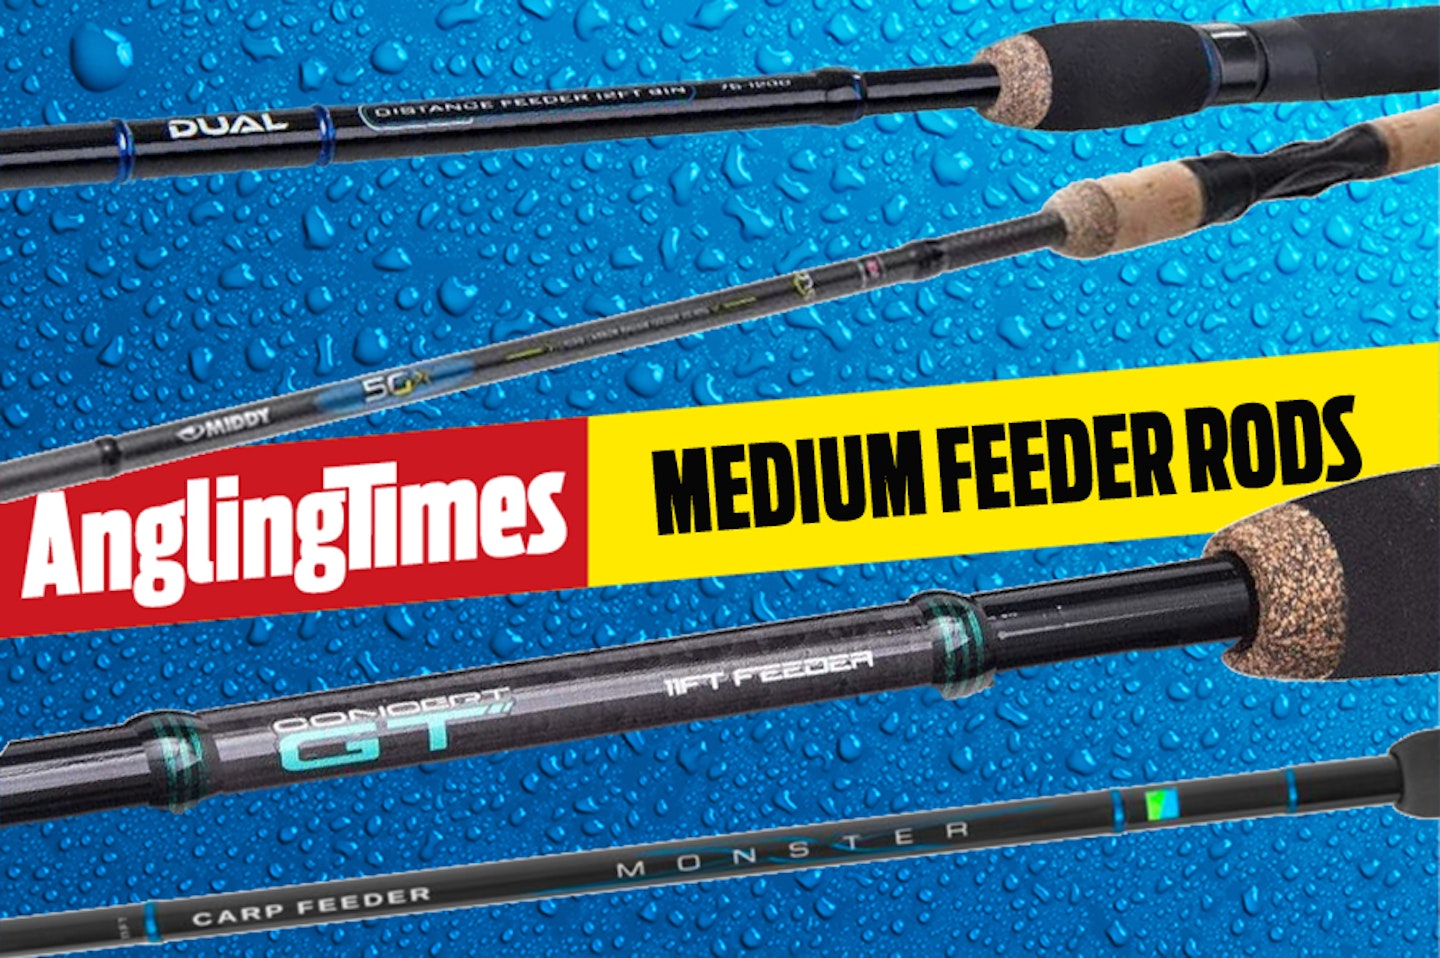 The best medium feeder rods